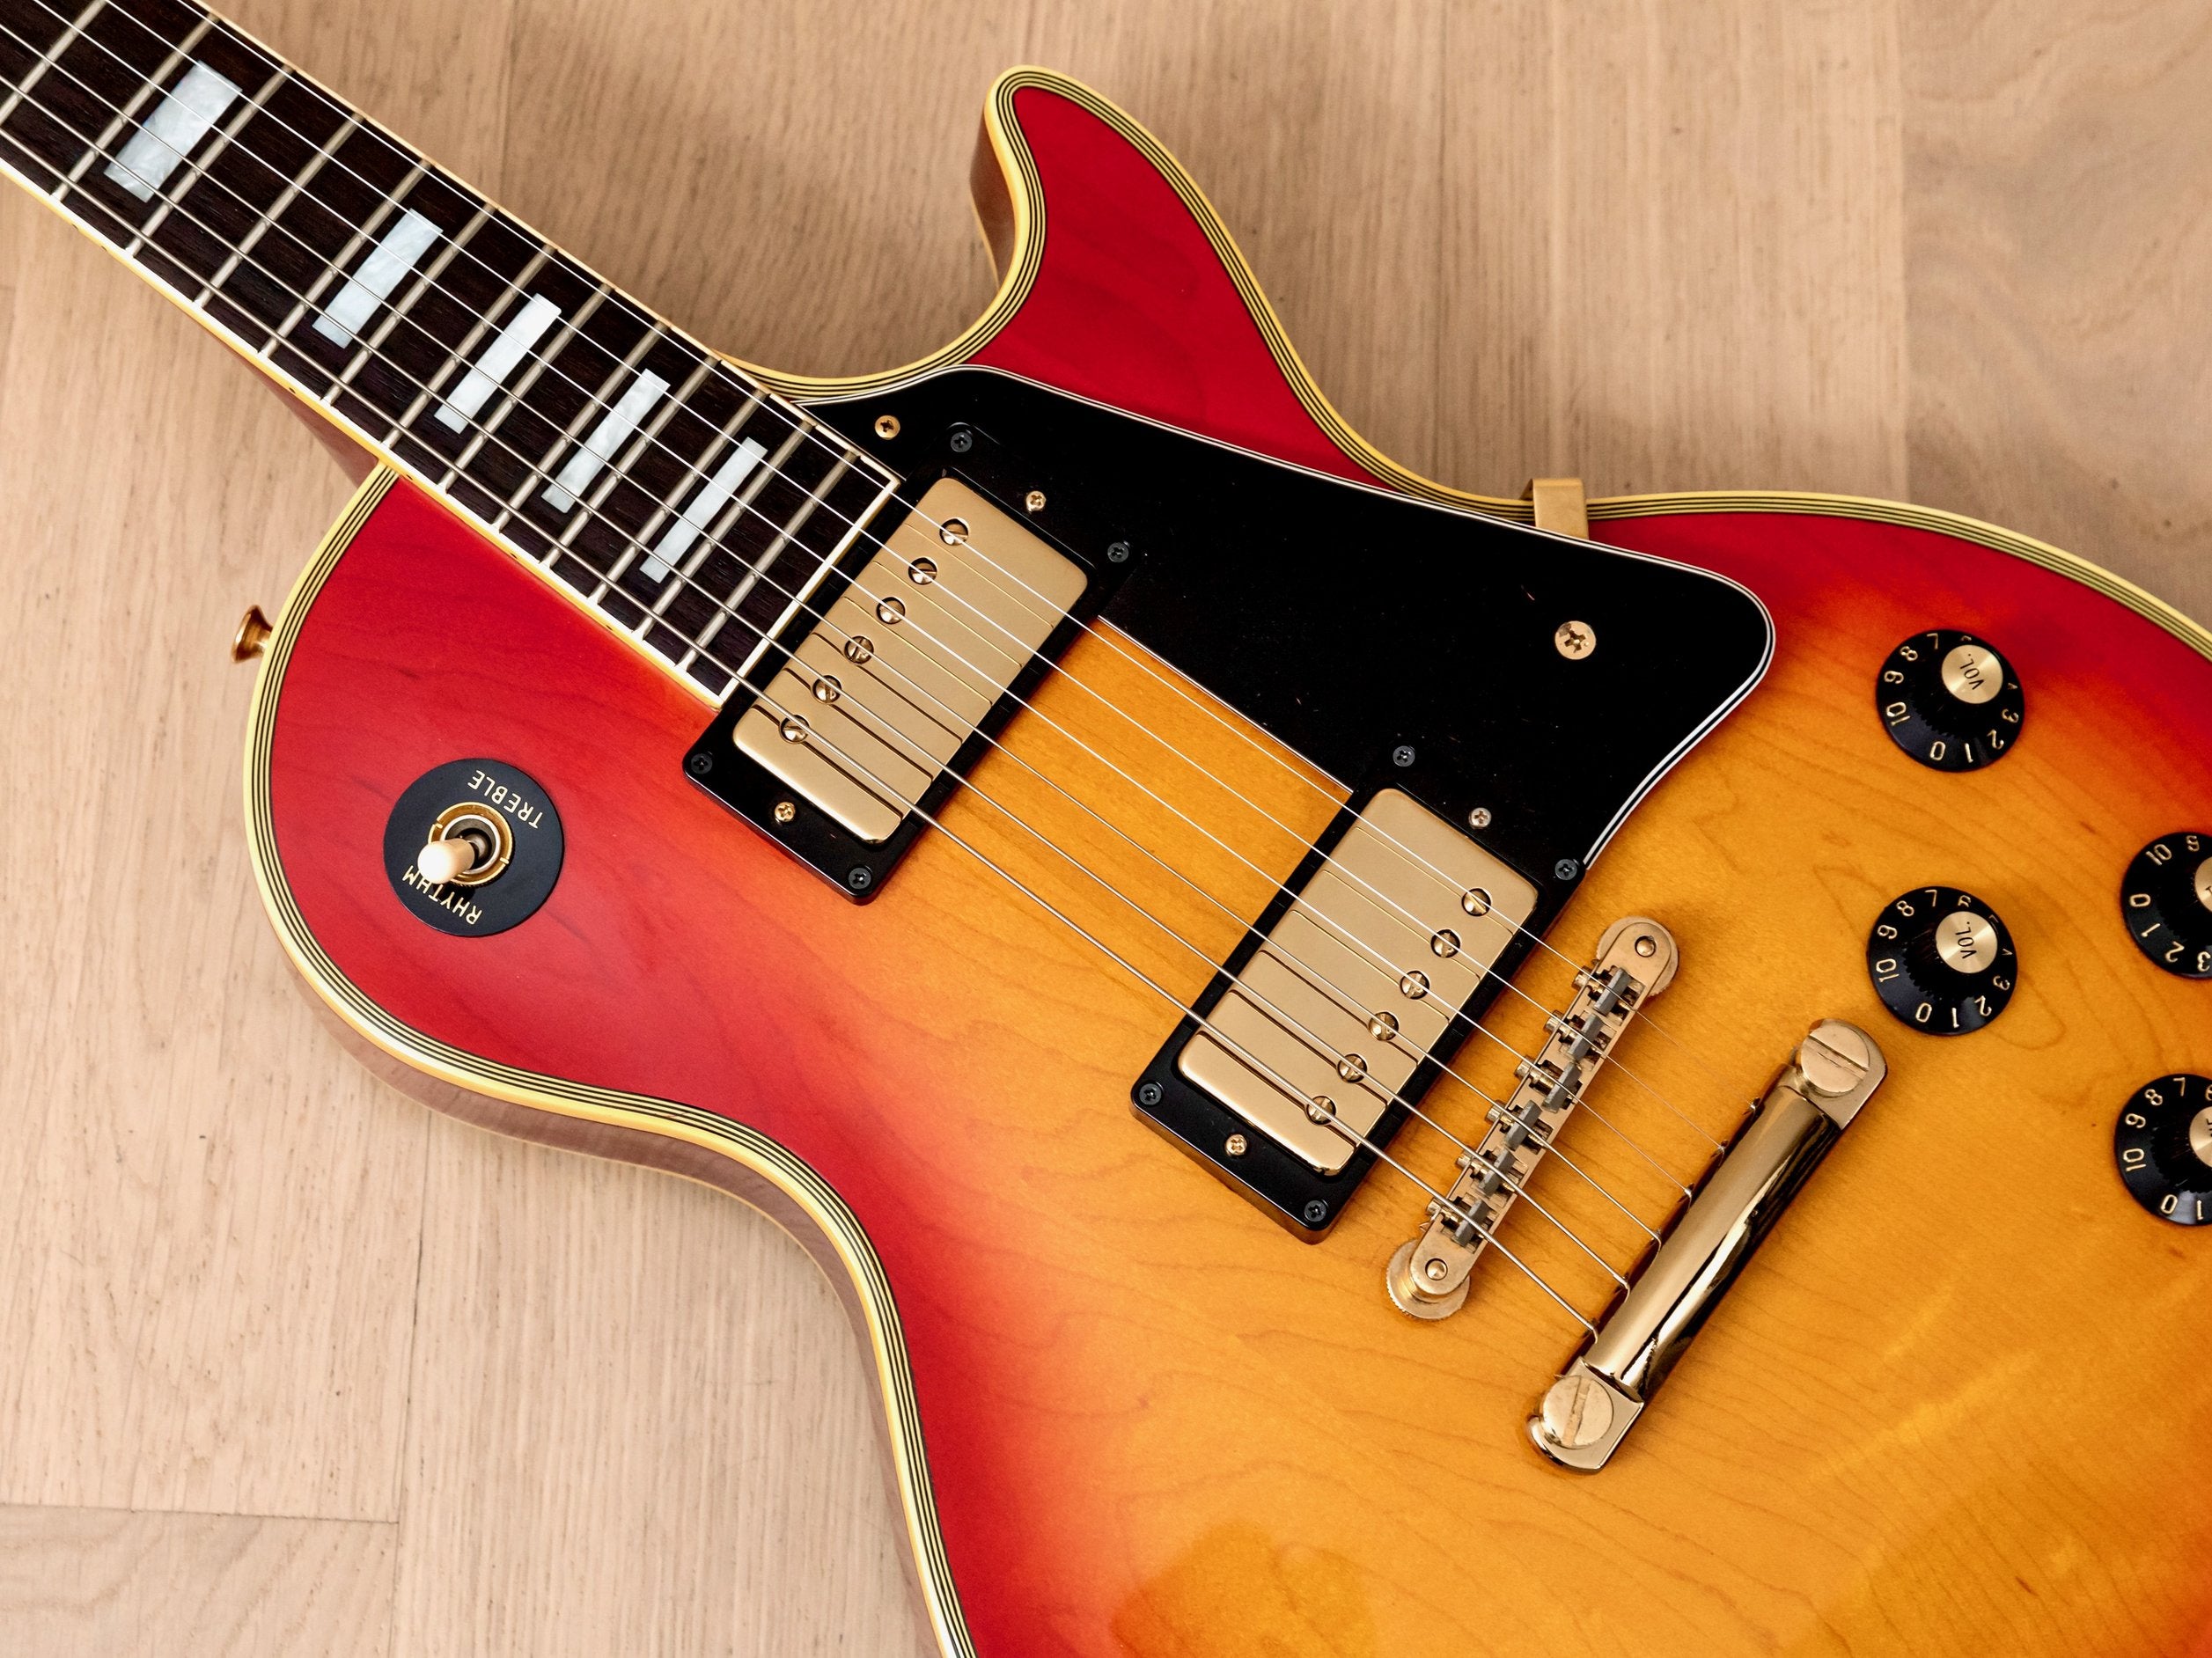 1981 Greco Super Power Custom EG500C Vintage Guitar Cherry Sunburst w/ Maxon Pickups & Case, Japan Fujigen